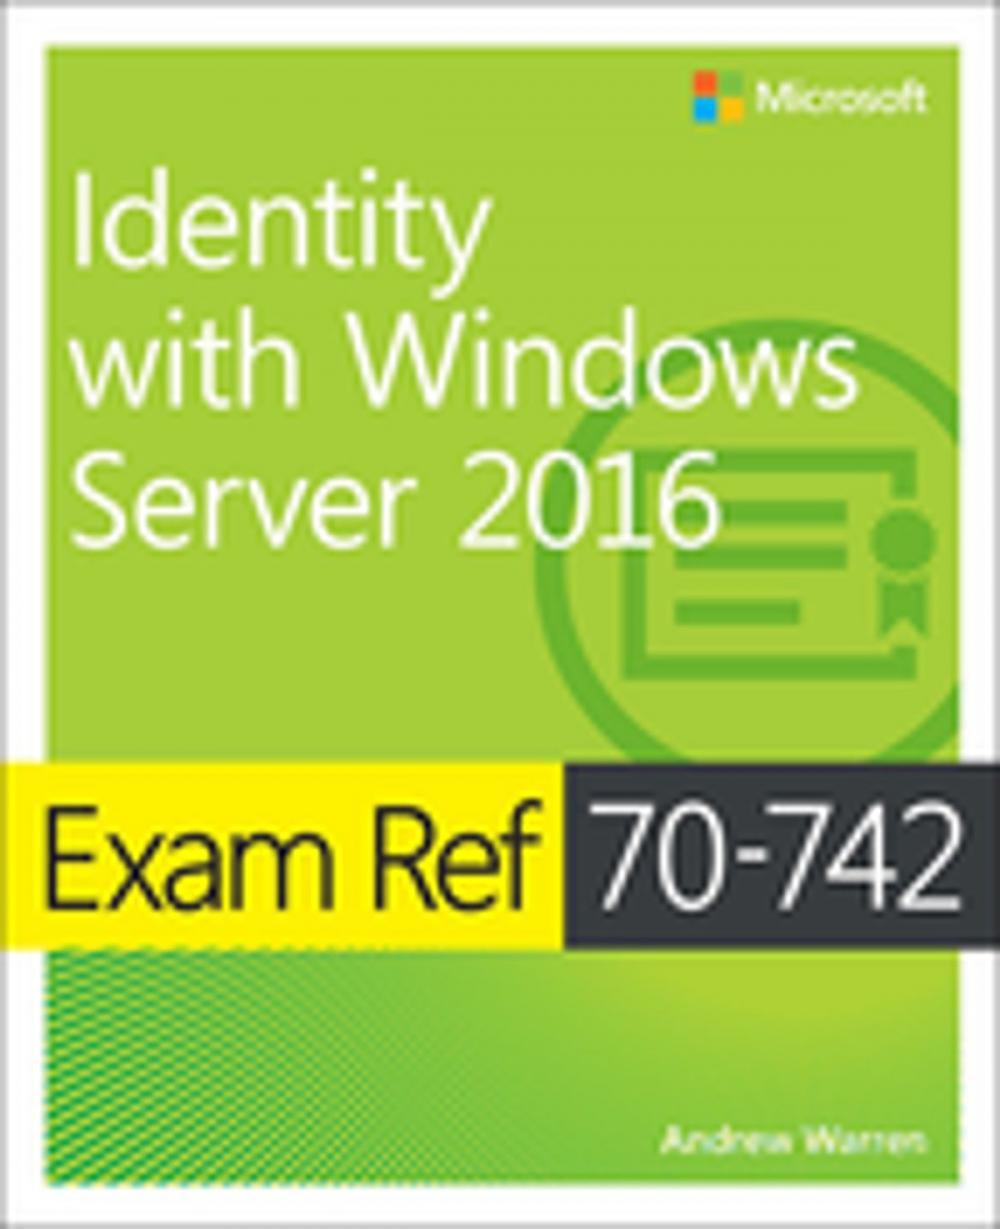 Big bigCover of Exam Ref 70-742 Identity with Windows Server 2016